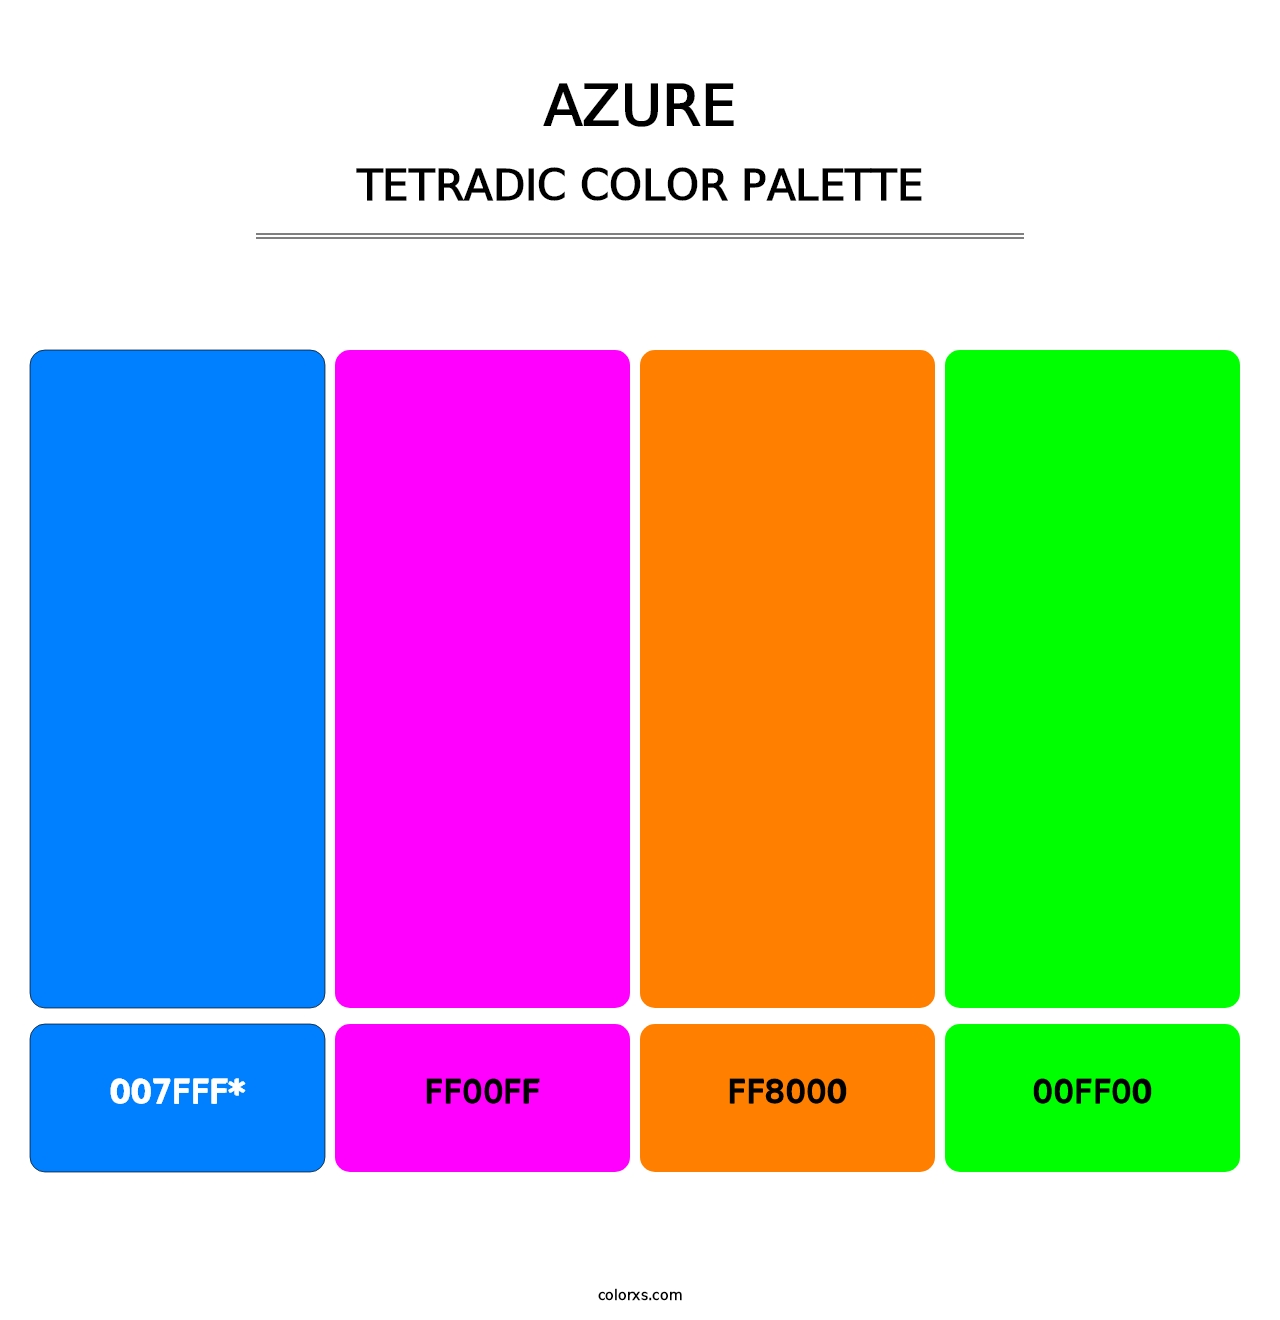 Azure - Tetradic Color Palette